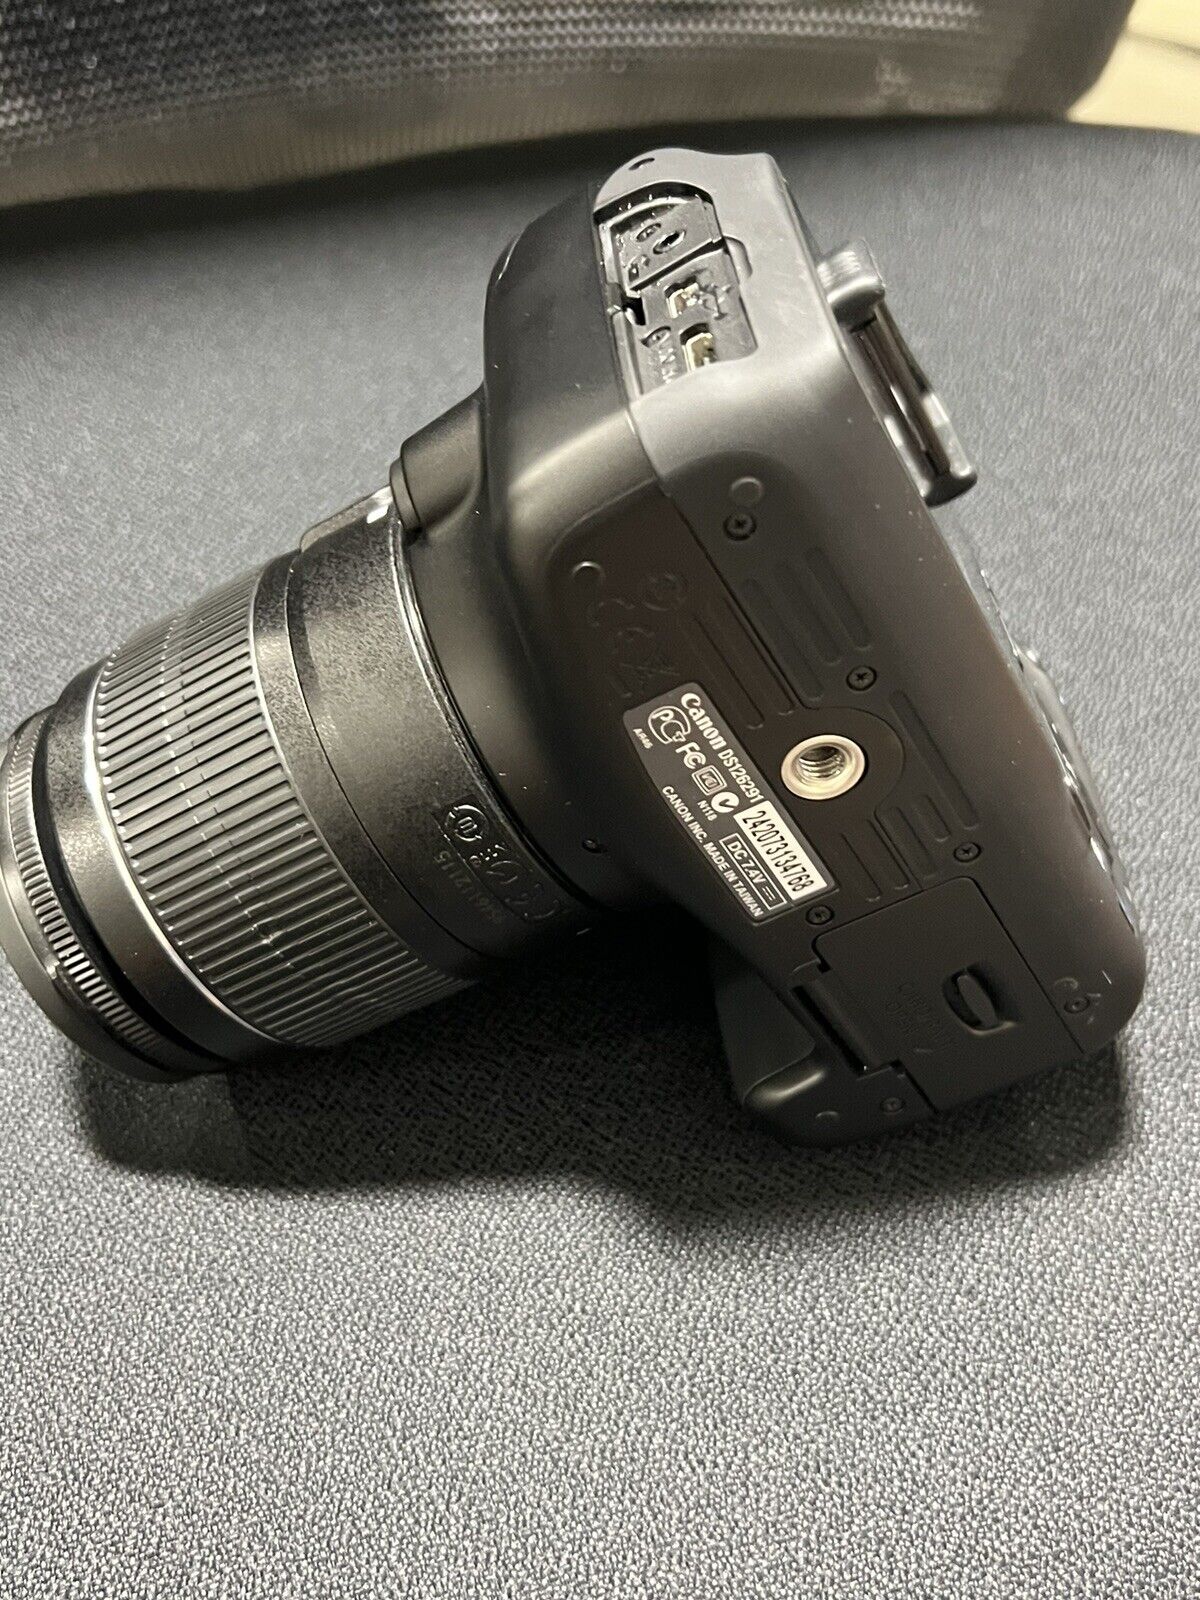 Canon EOS Rebel T3 Digital SLR Camera Black with EFS 18-55mm Lens